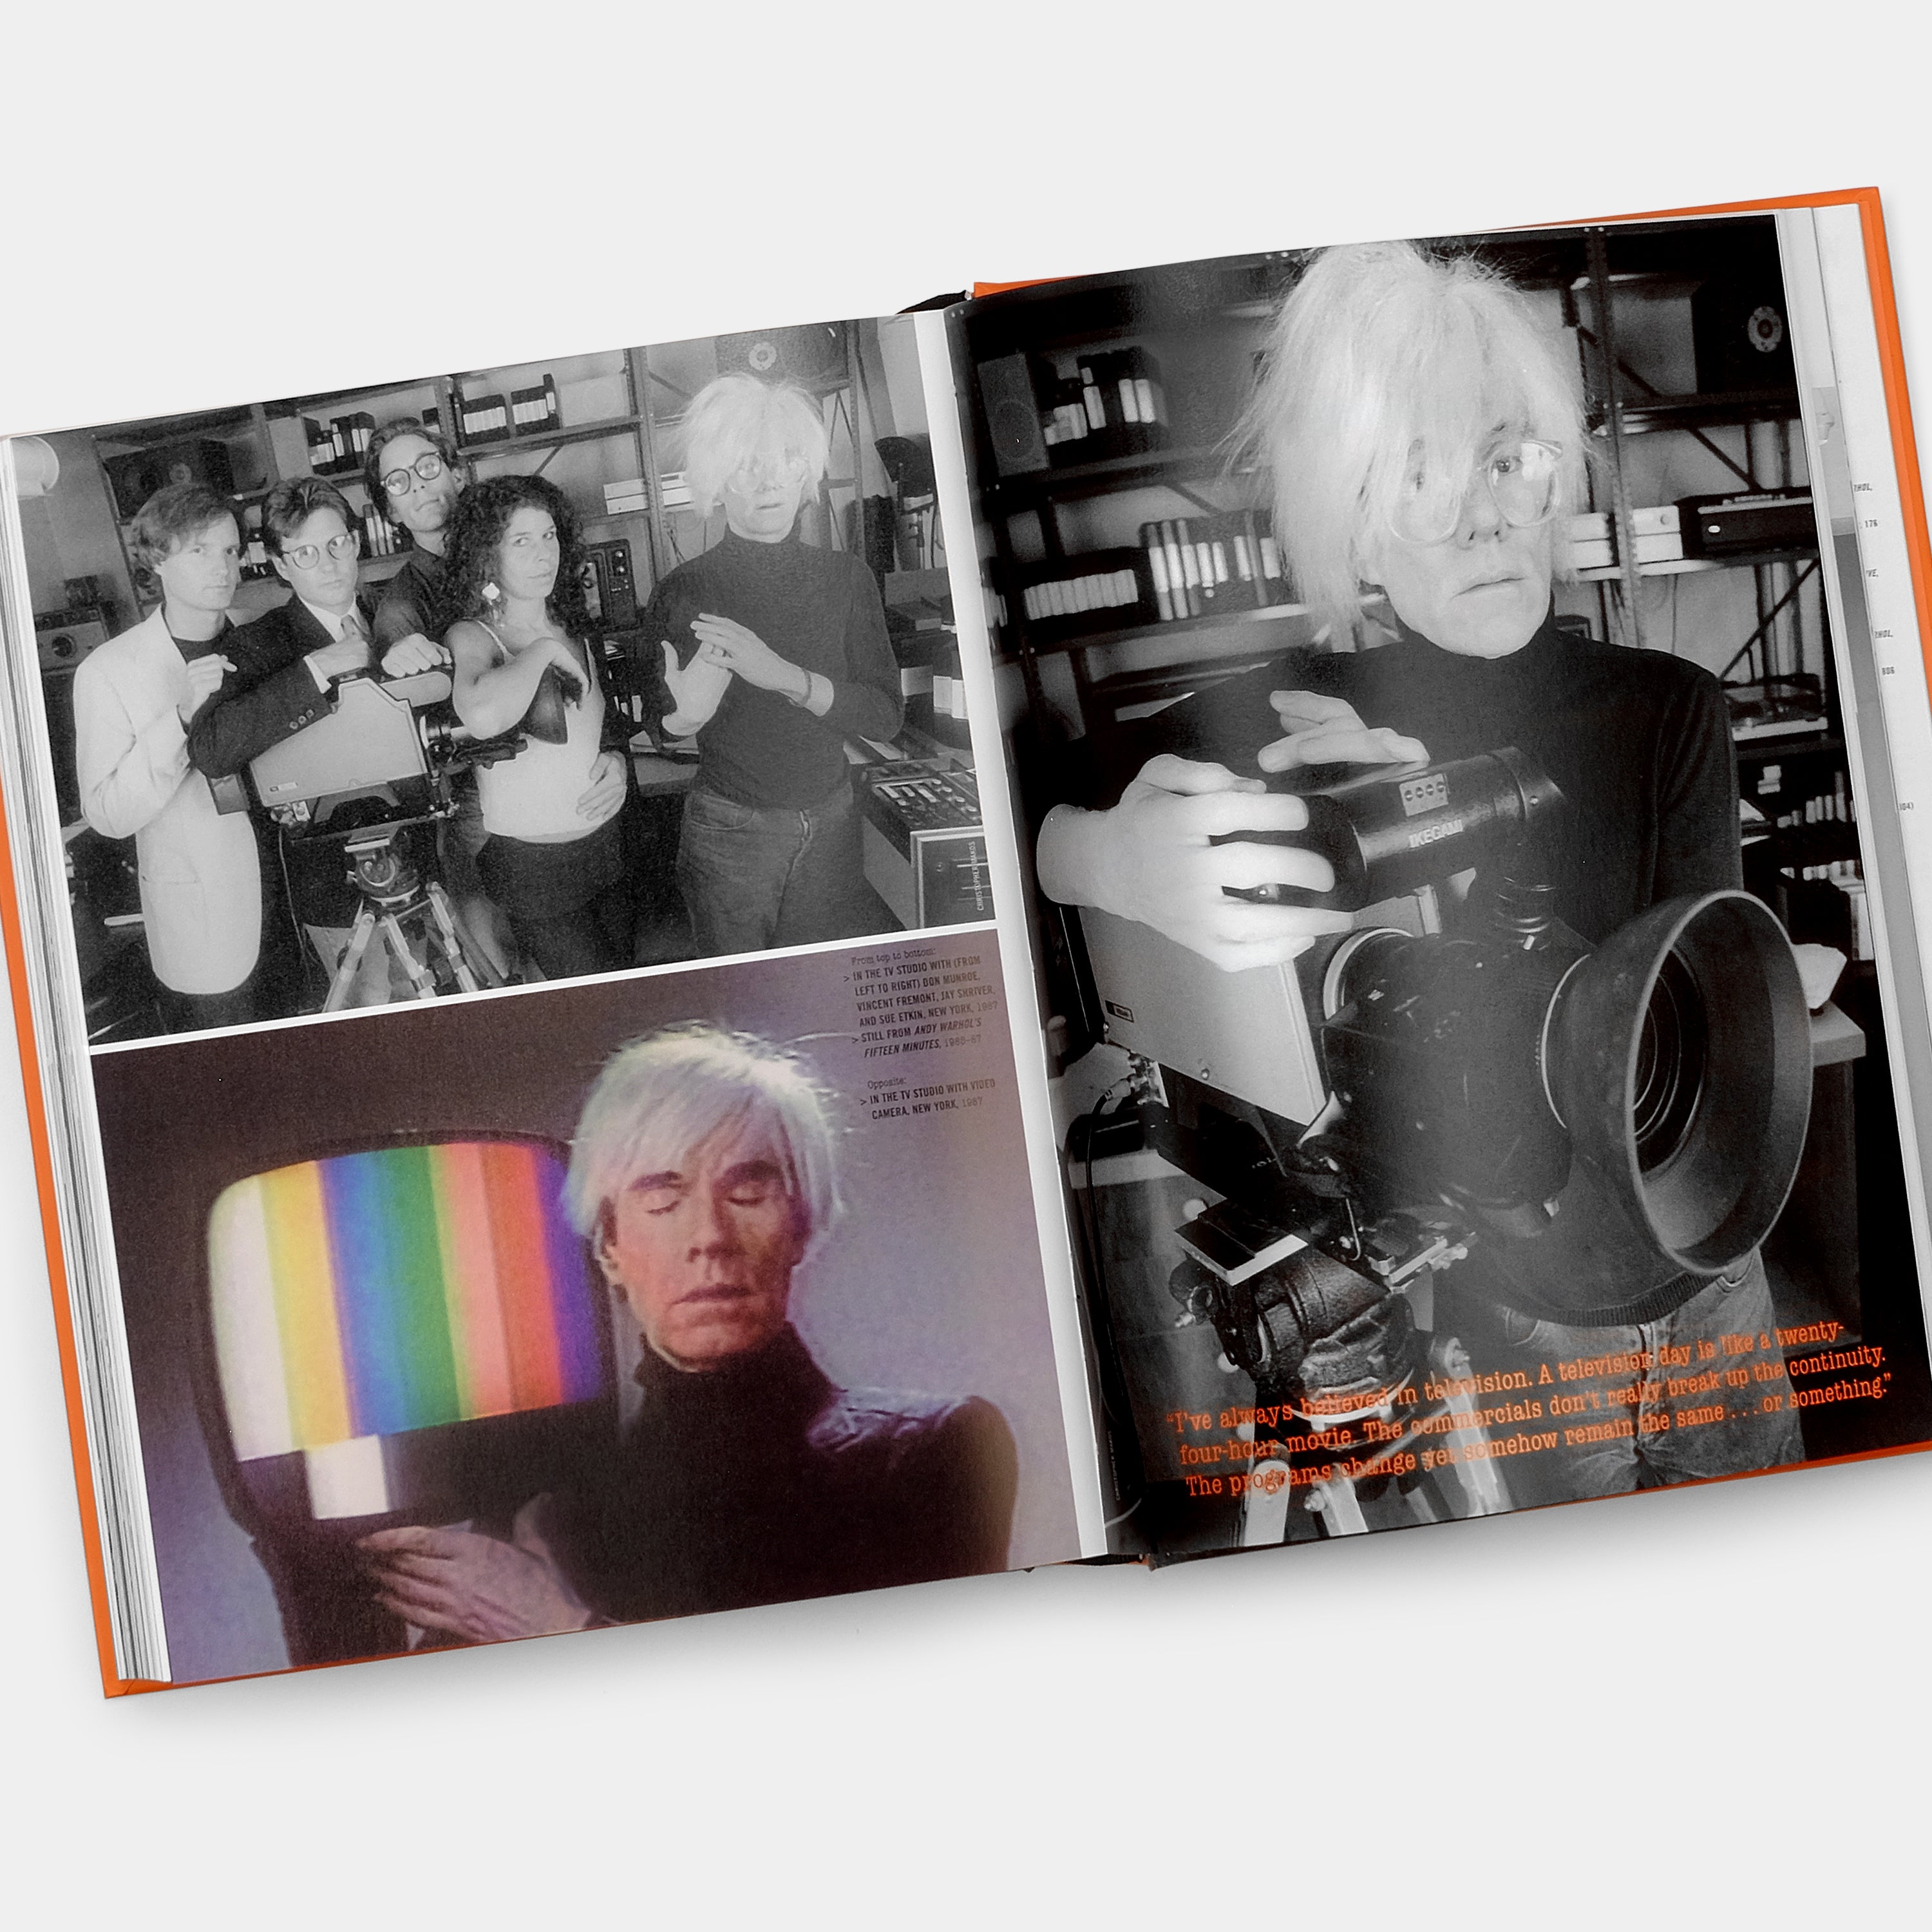 Andy Warhol "Giant" Size Phaidon Book